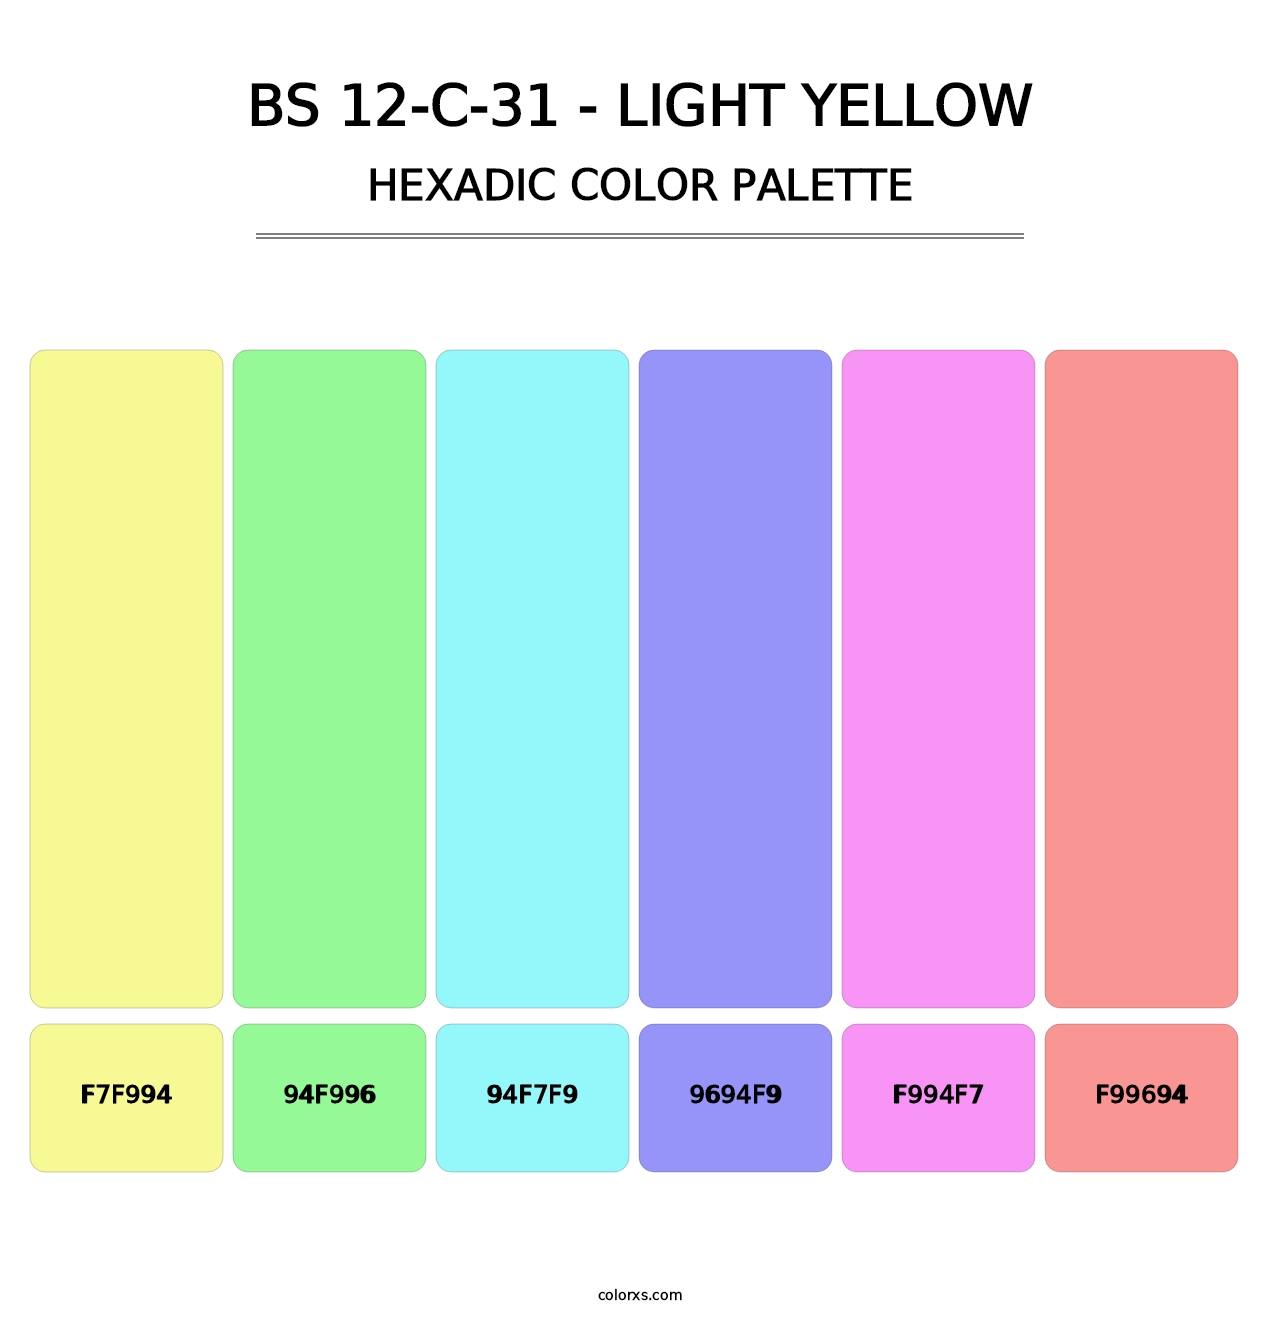 BS 12-C-31 - Light Yellow - Hexadic Color Palette